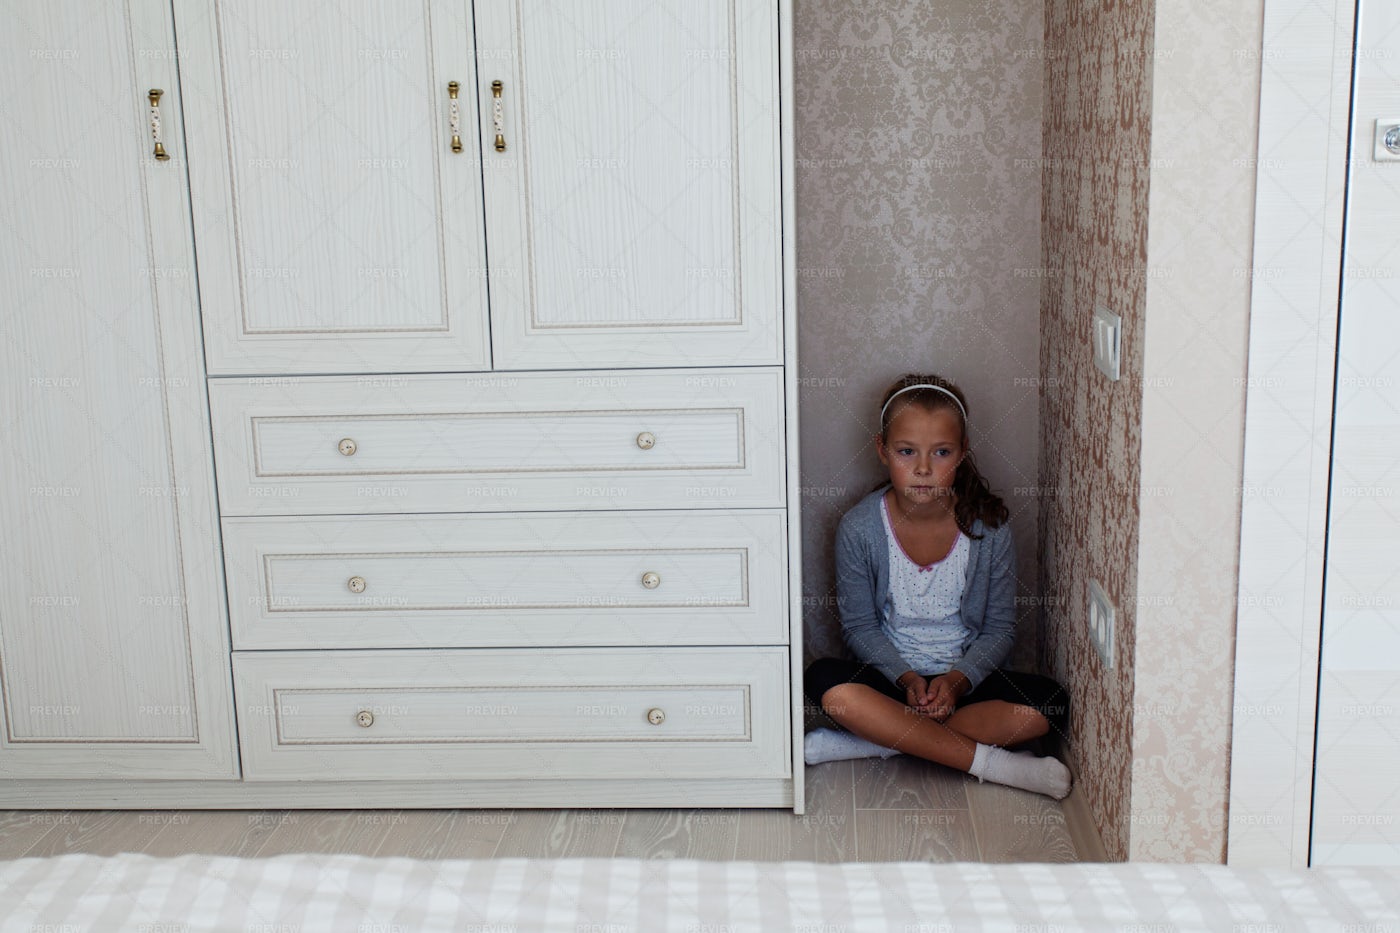 Девочка в углу. Девочка сидит в углу комнаты. Девочка стоит в углу. Девочка сидит в углу фото.